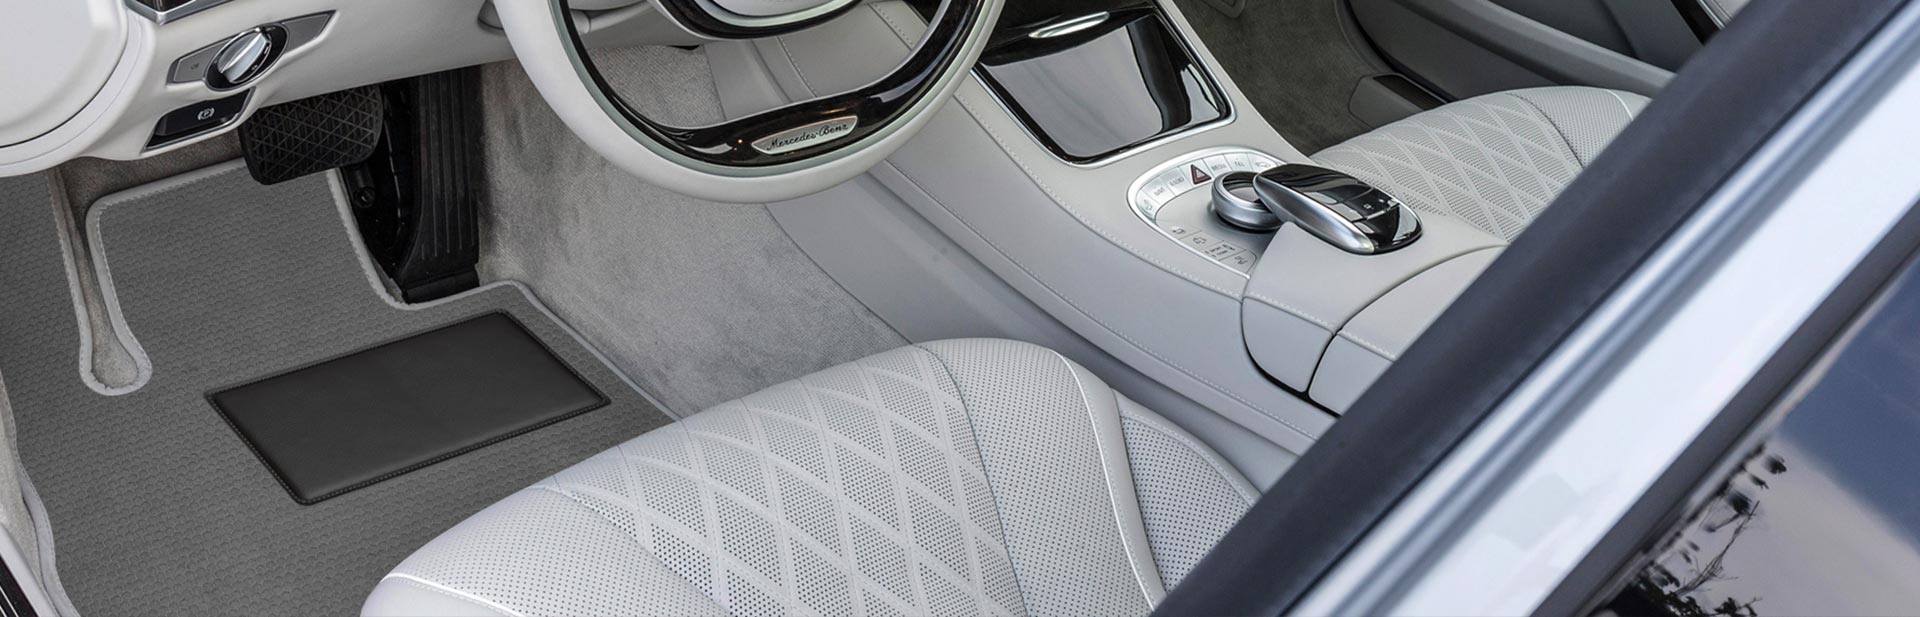 Car Floor Mats for Mercedes Benz